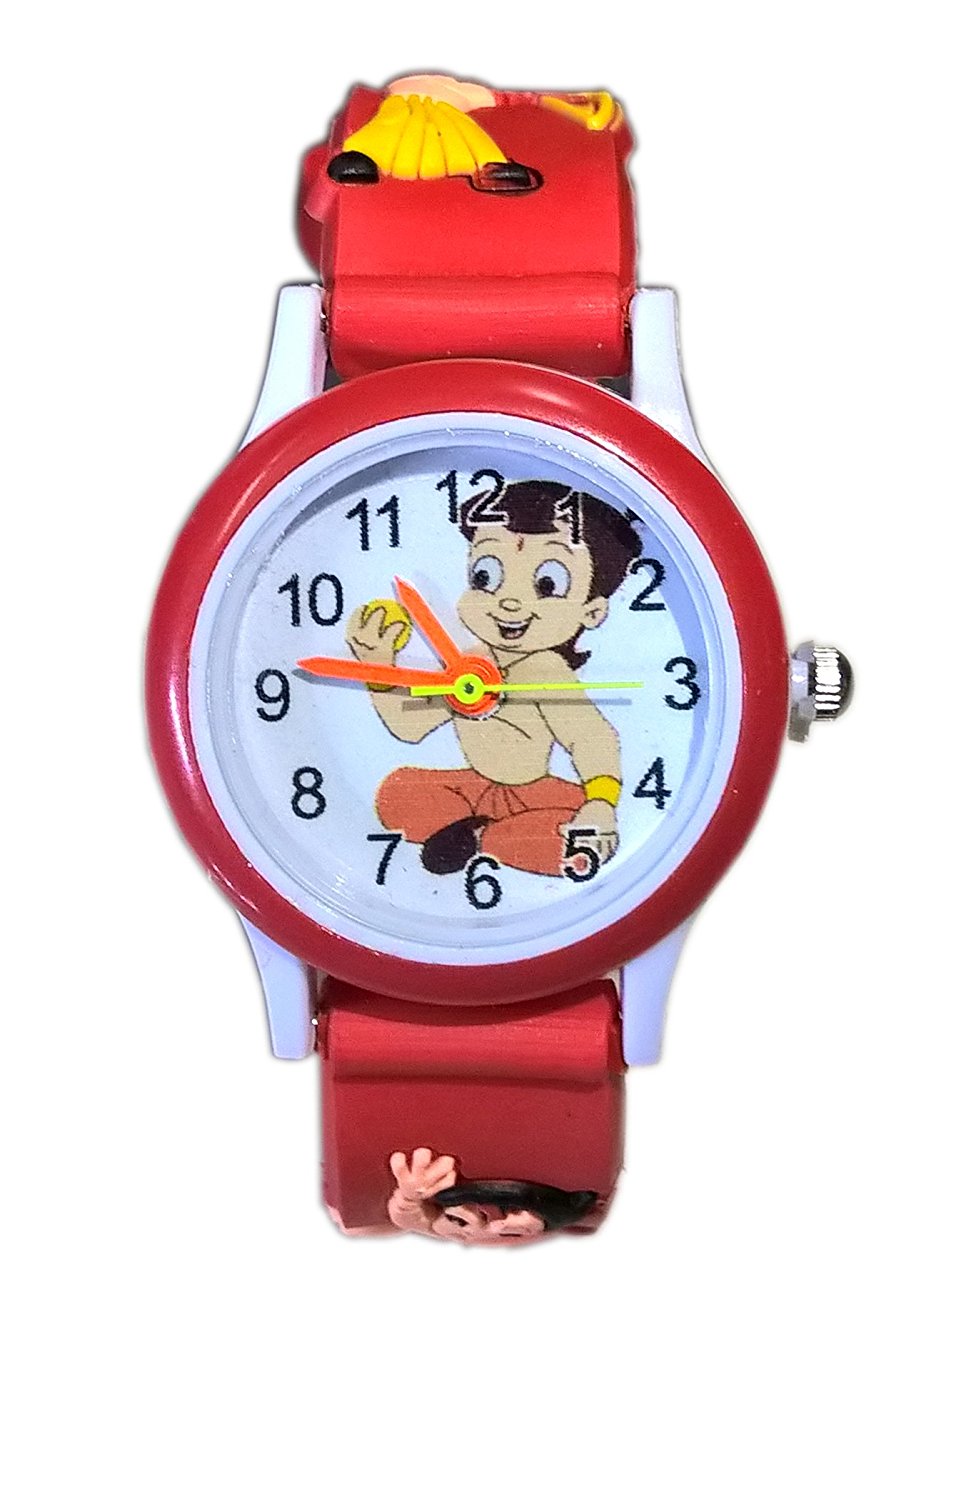 Kids wrist watch clipart